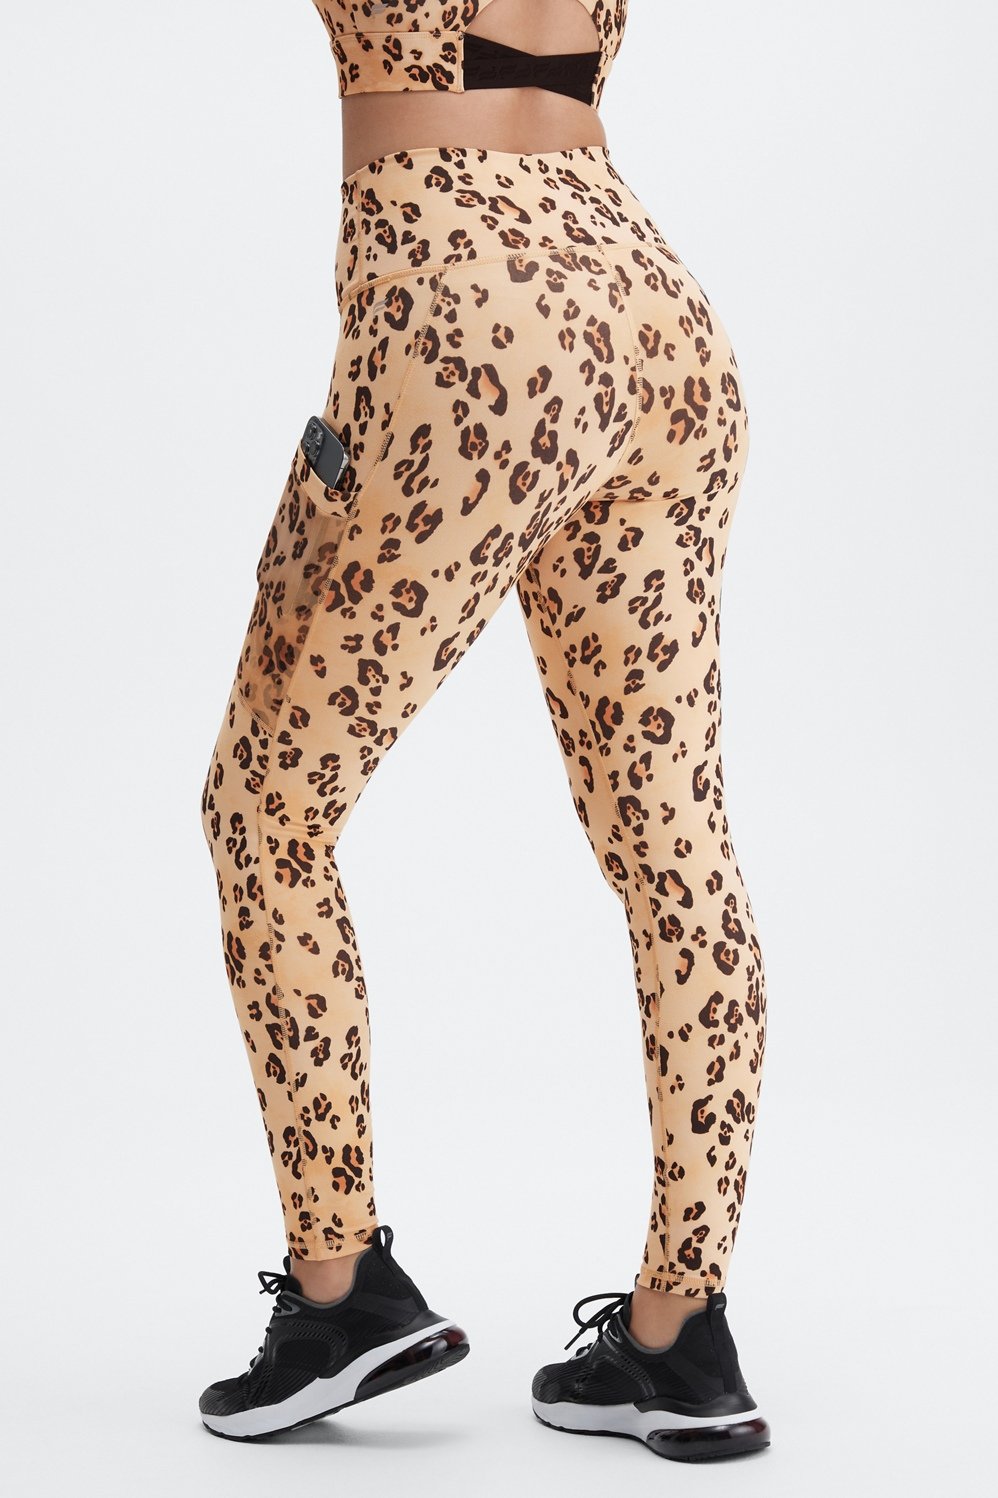 Women's Active Cheetah Animal Print Workout Capri Leggings, Black Tan, Small  2-4 